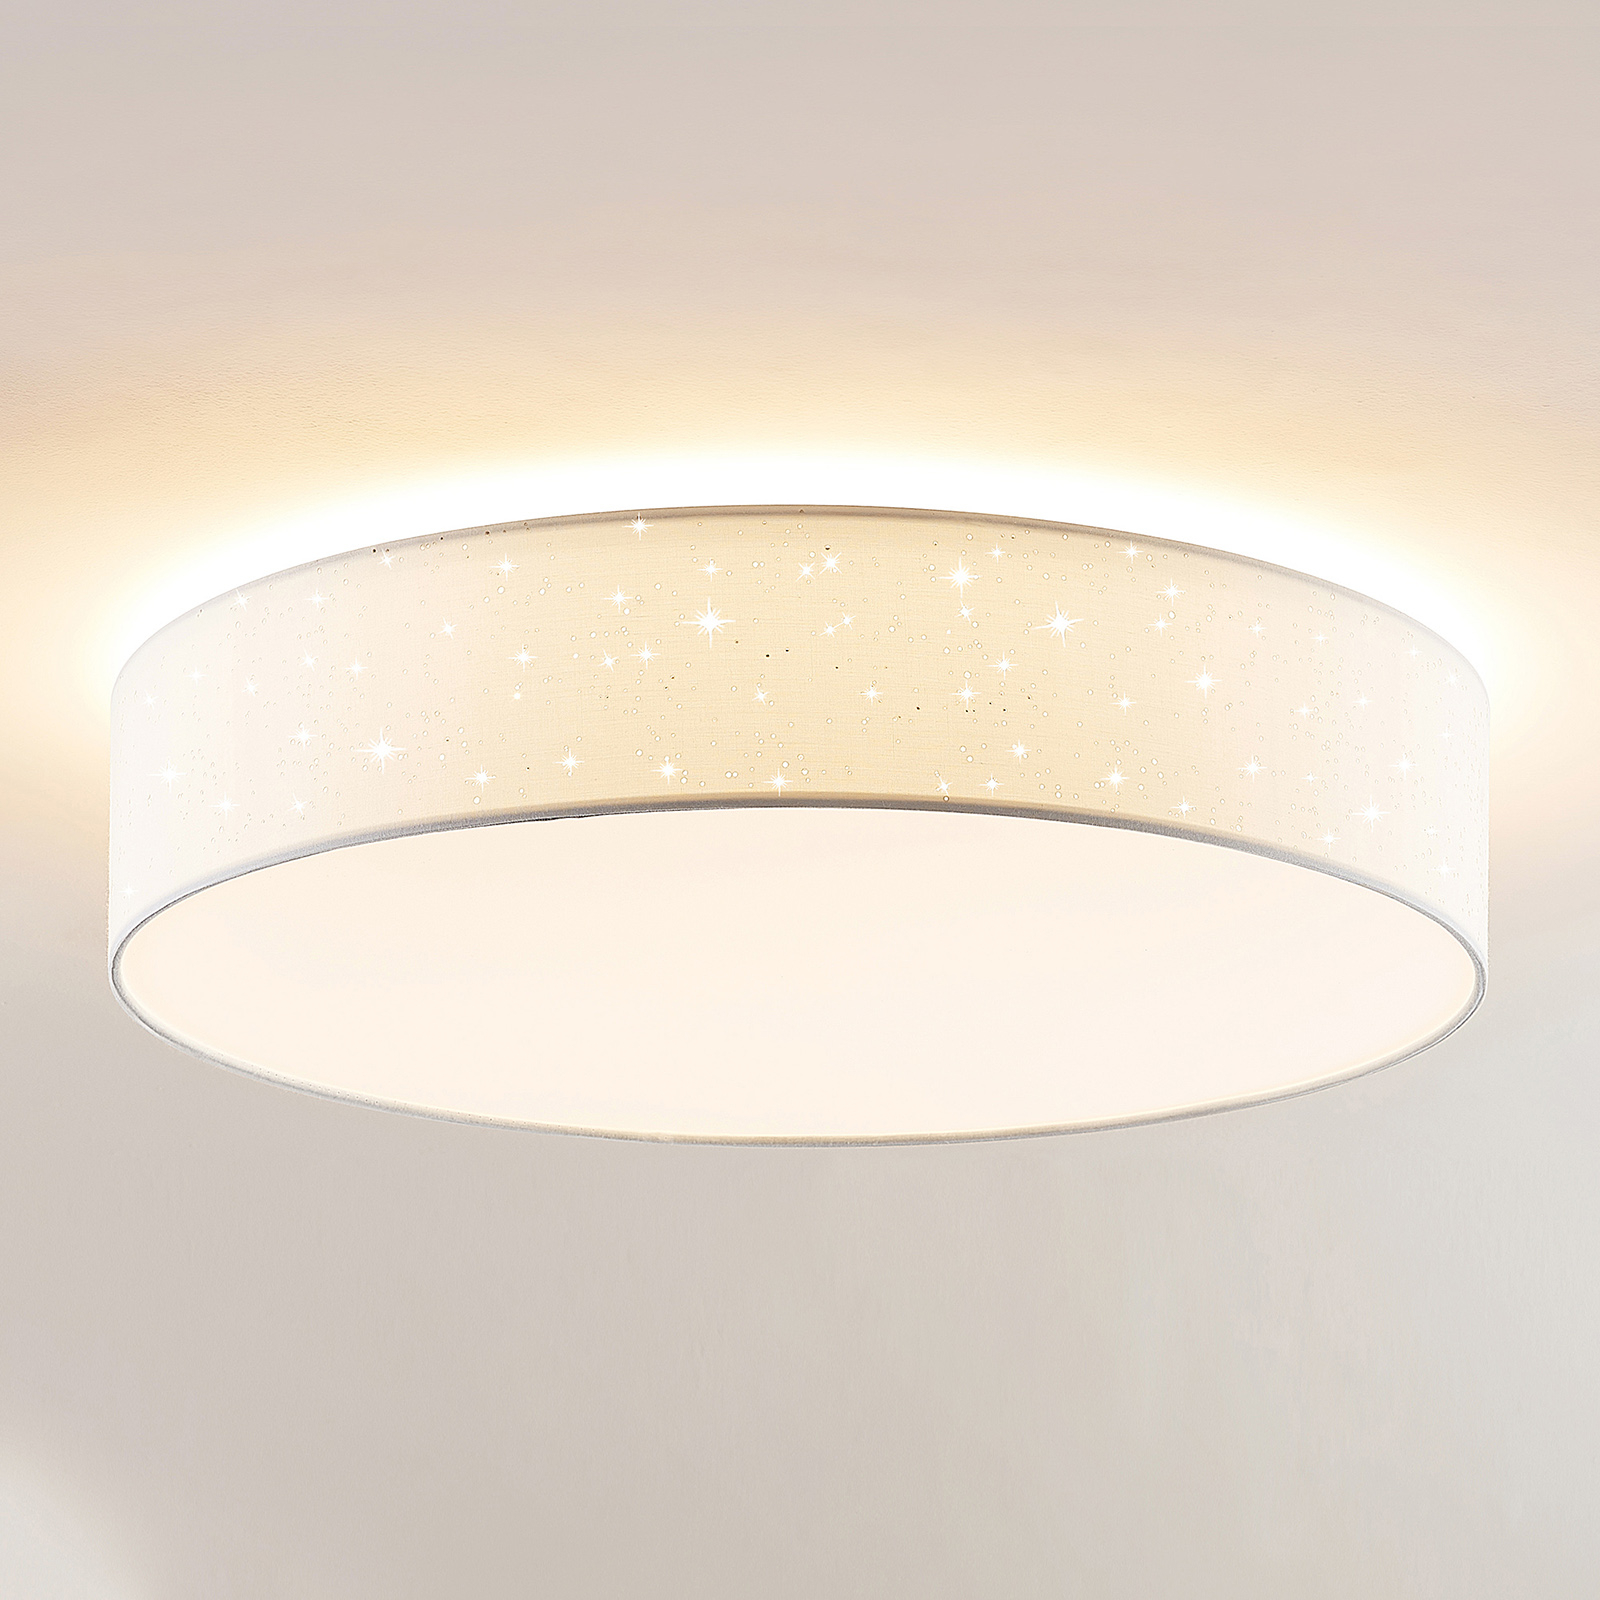 kaas Aannemer Bedelen Lindby Ellamina LED plafondlamp, 60 cm, wit | Lampen24.be